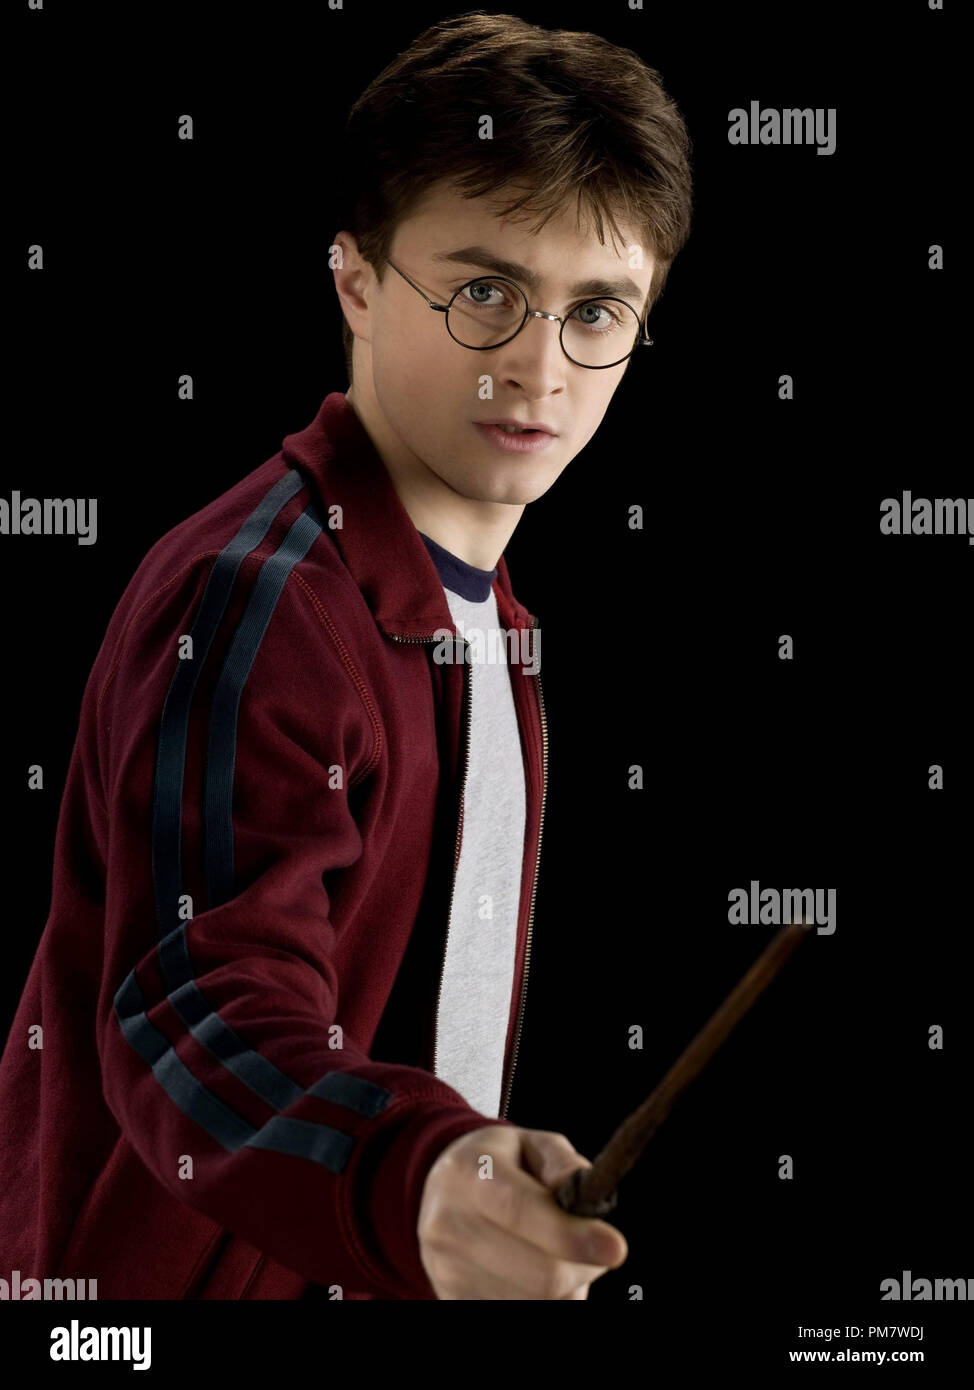 Photocall Harry Potter Half Blood Prince Foto de stock de contenido  editorial - Imagen de stock